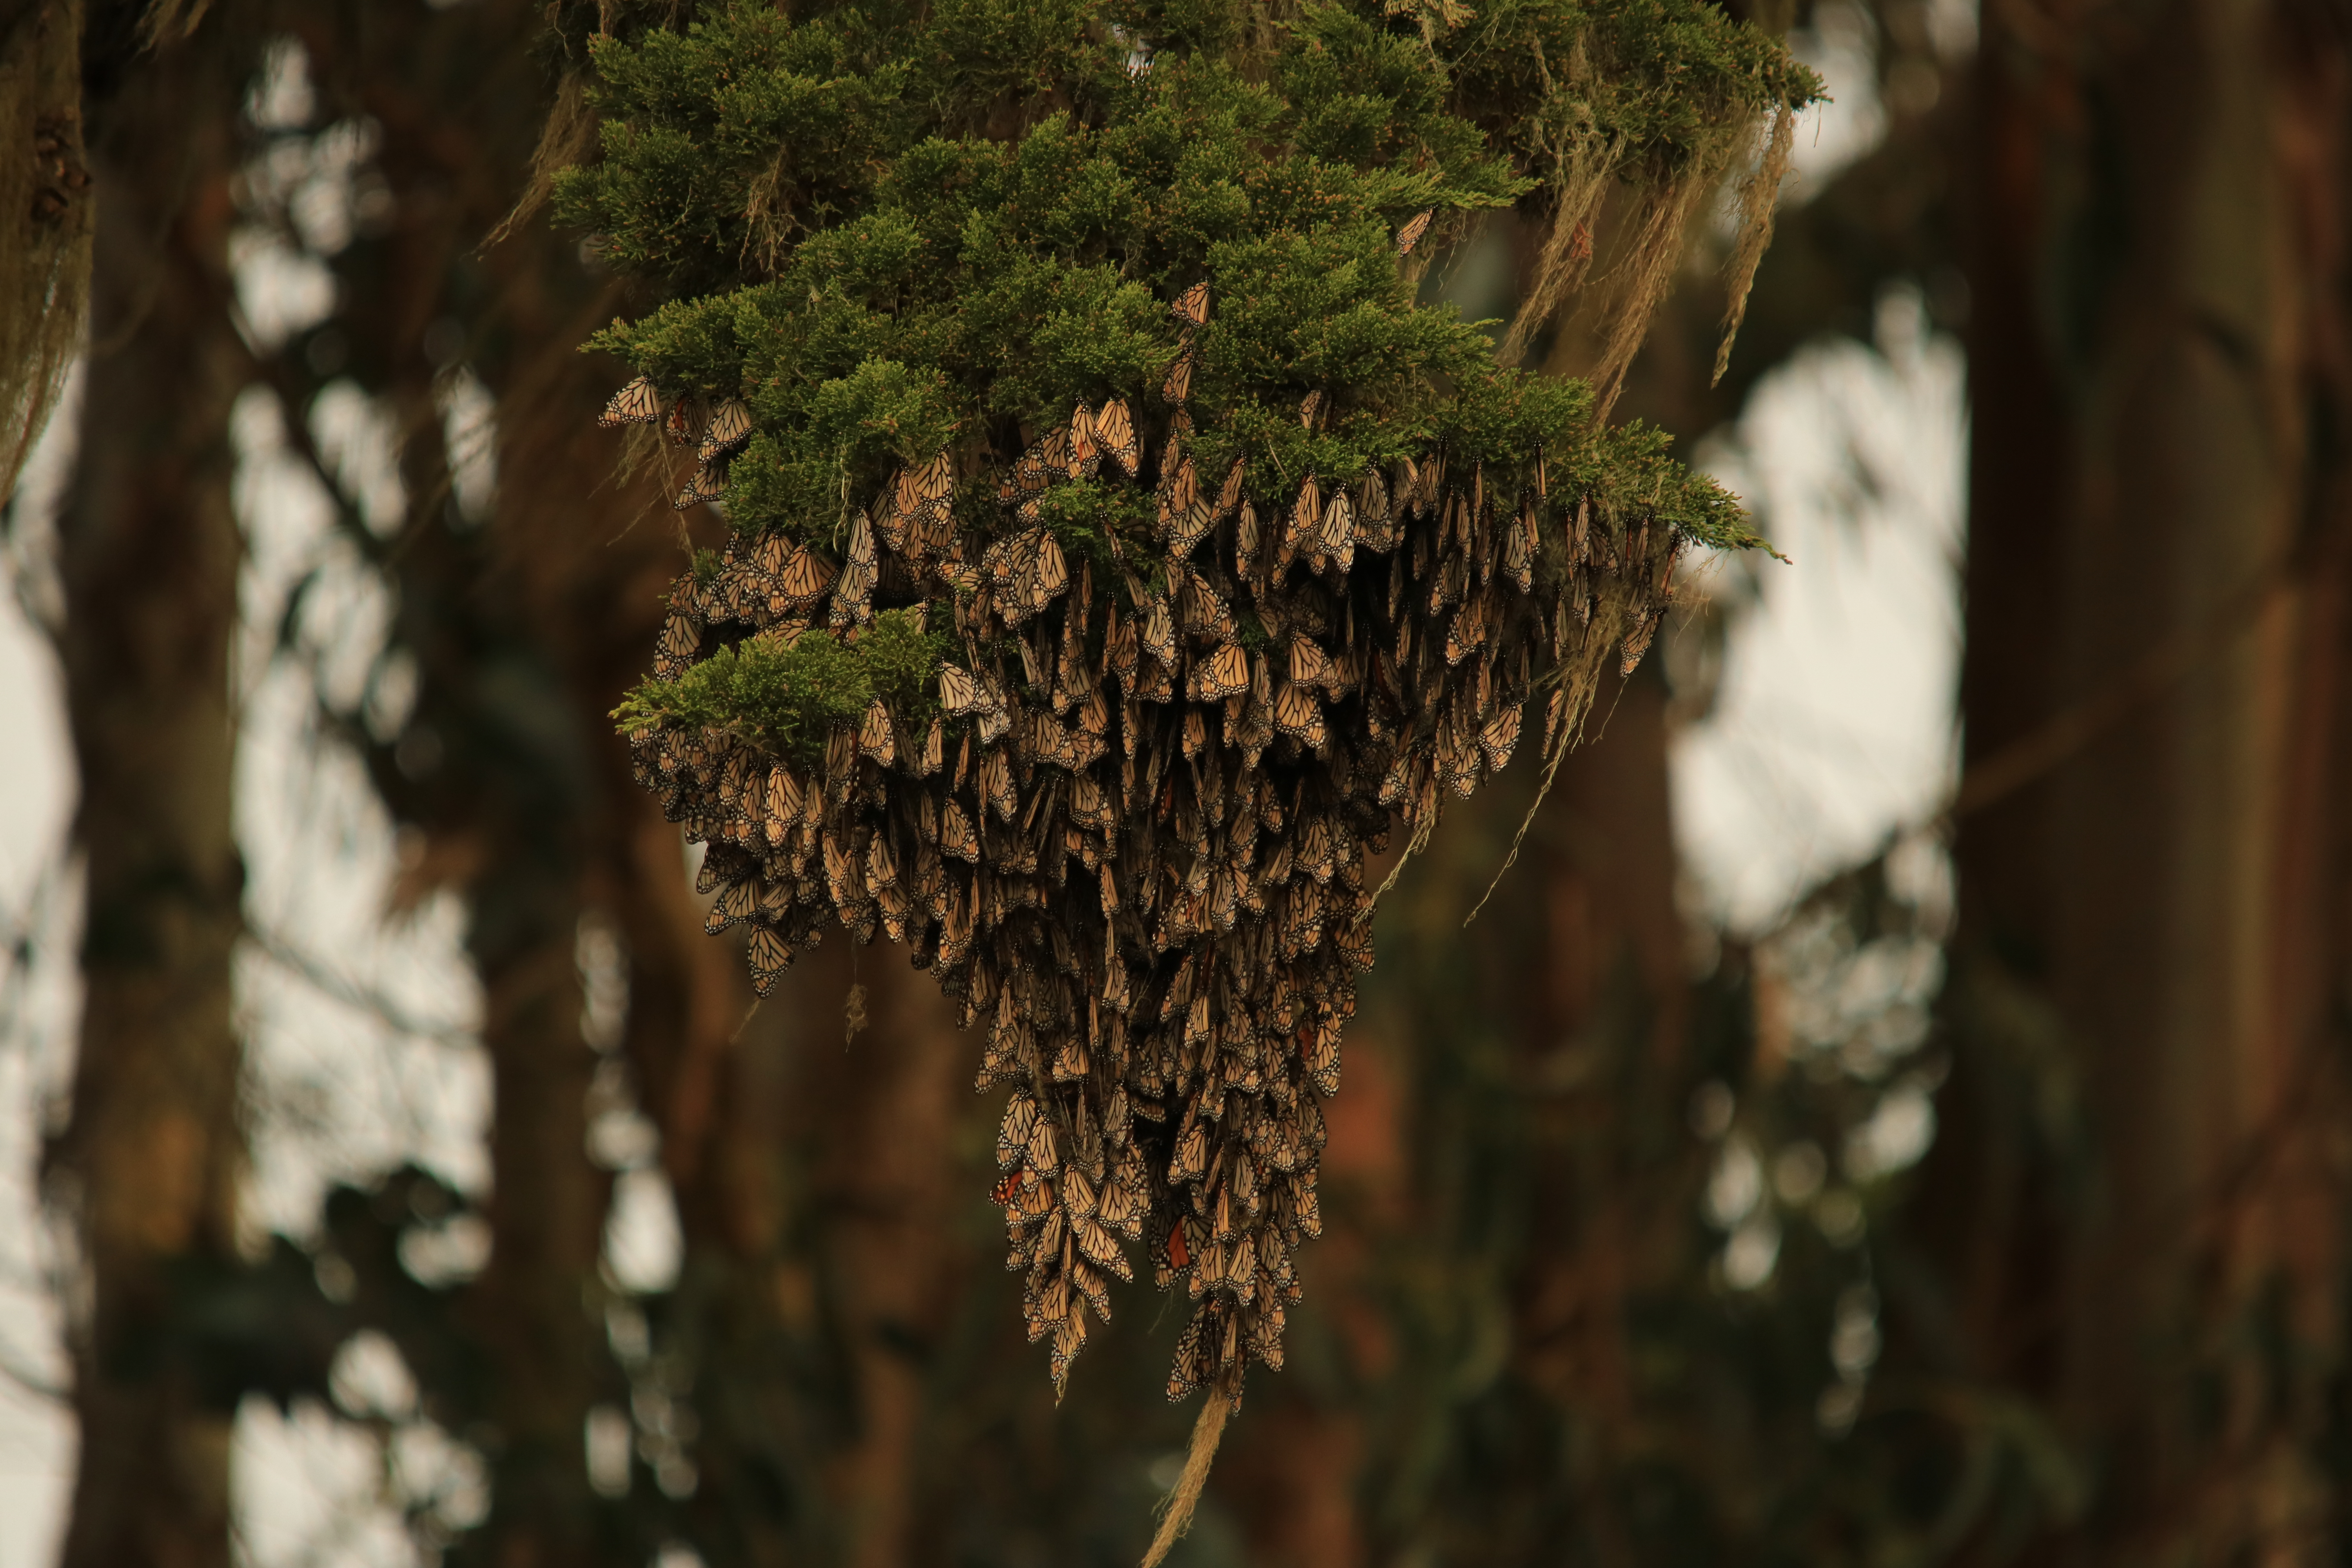 A cluster of monarch butterflies